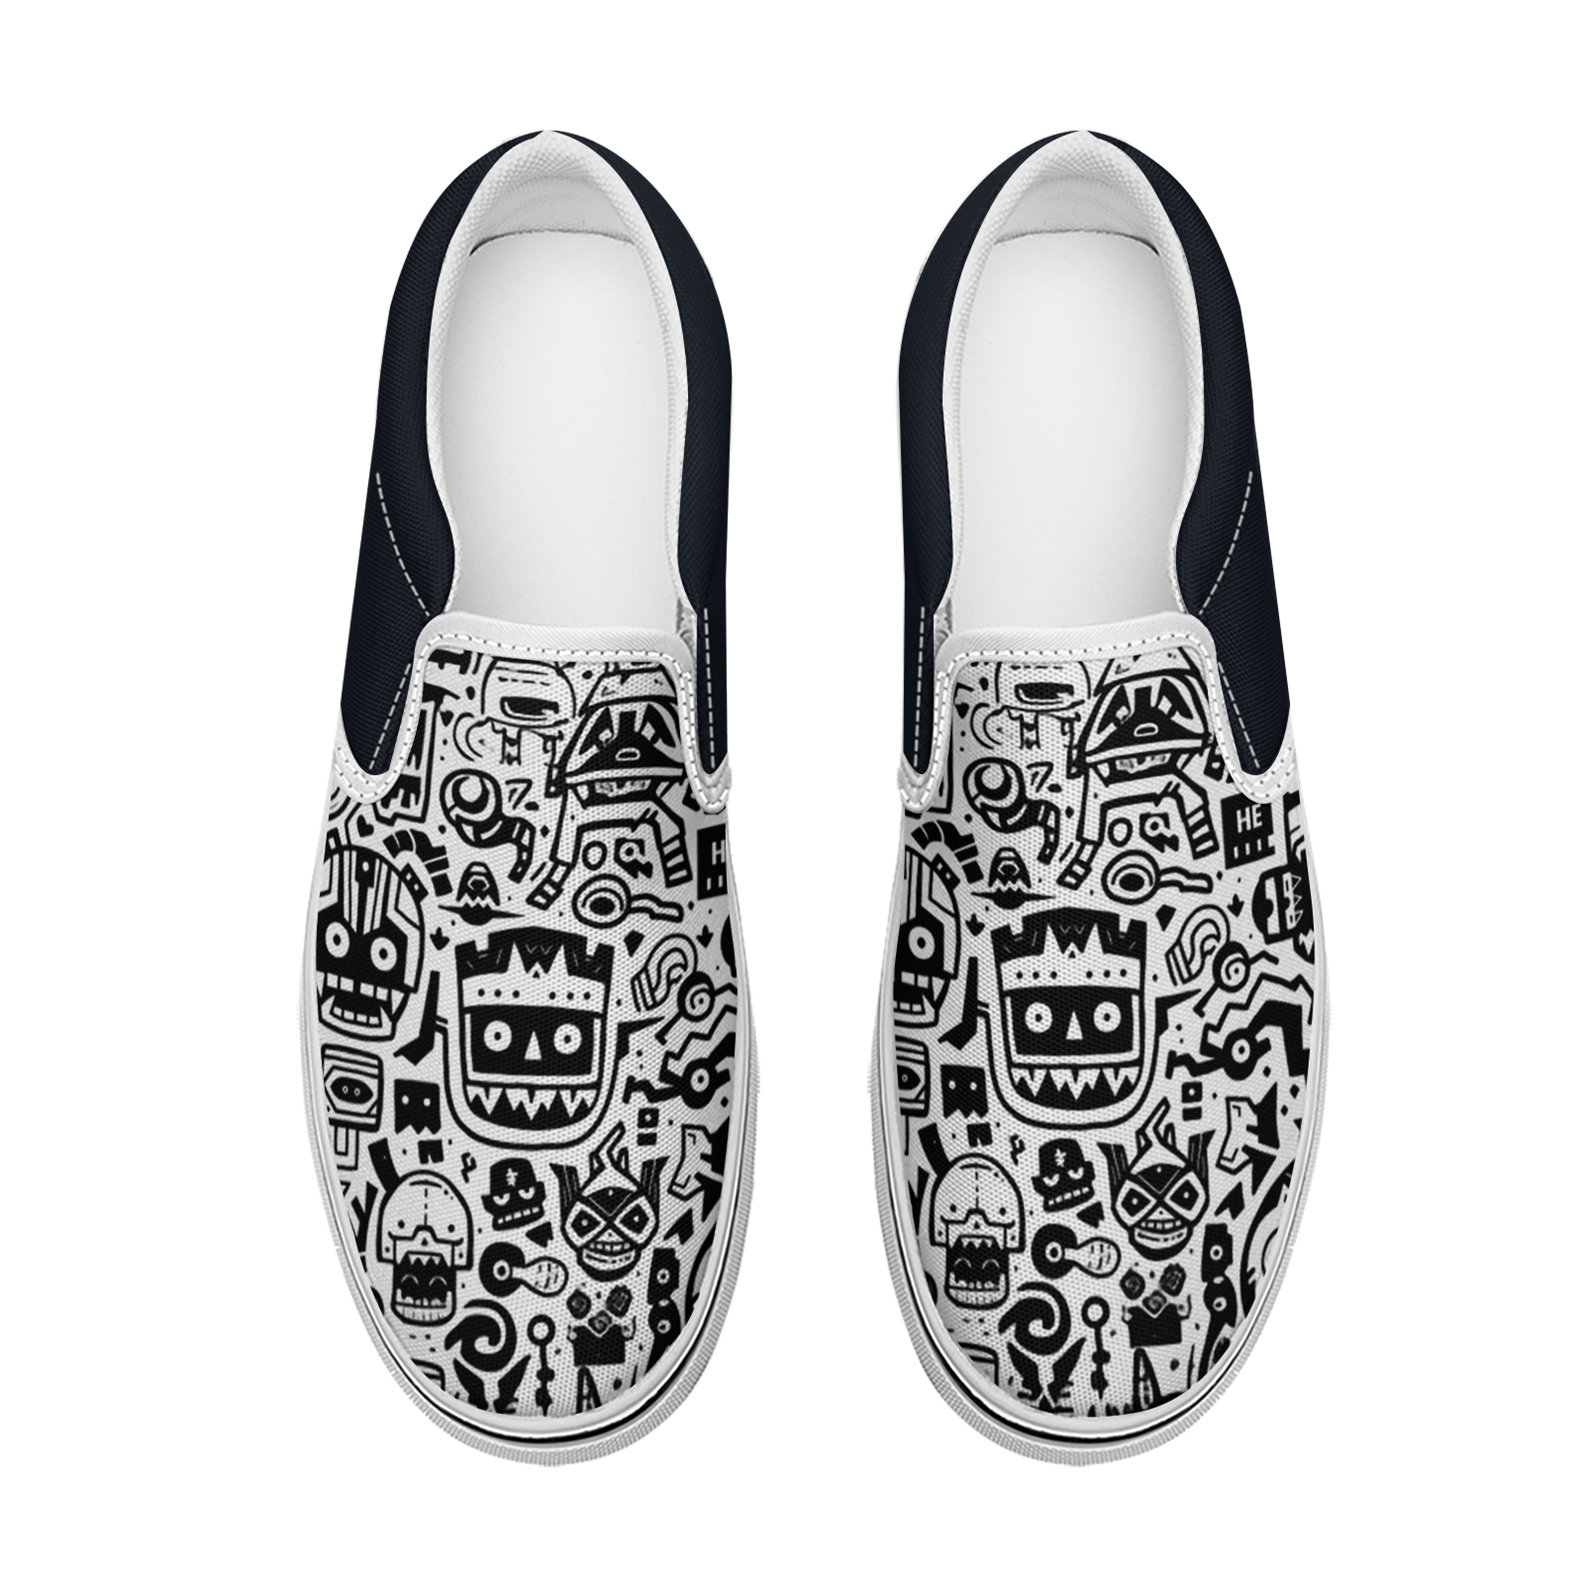 Men's Fashion Graffiti Slip On Canvas Sneaker Low Top Casual Walking Shoes Classic Comfort Flat Fashion Sneakers